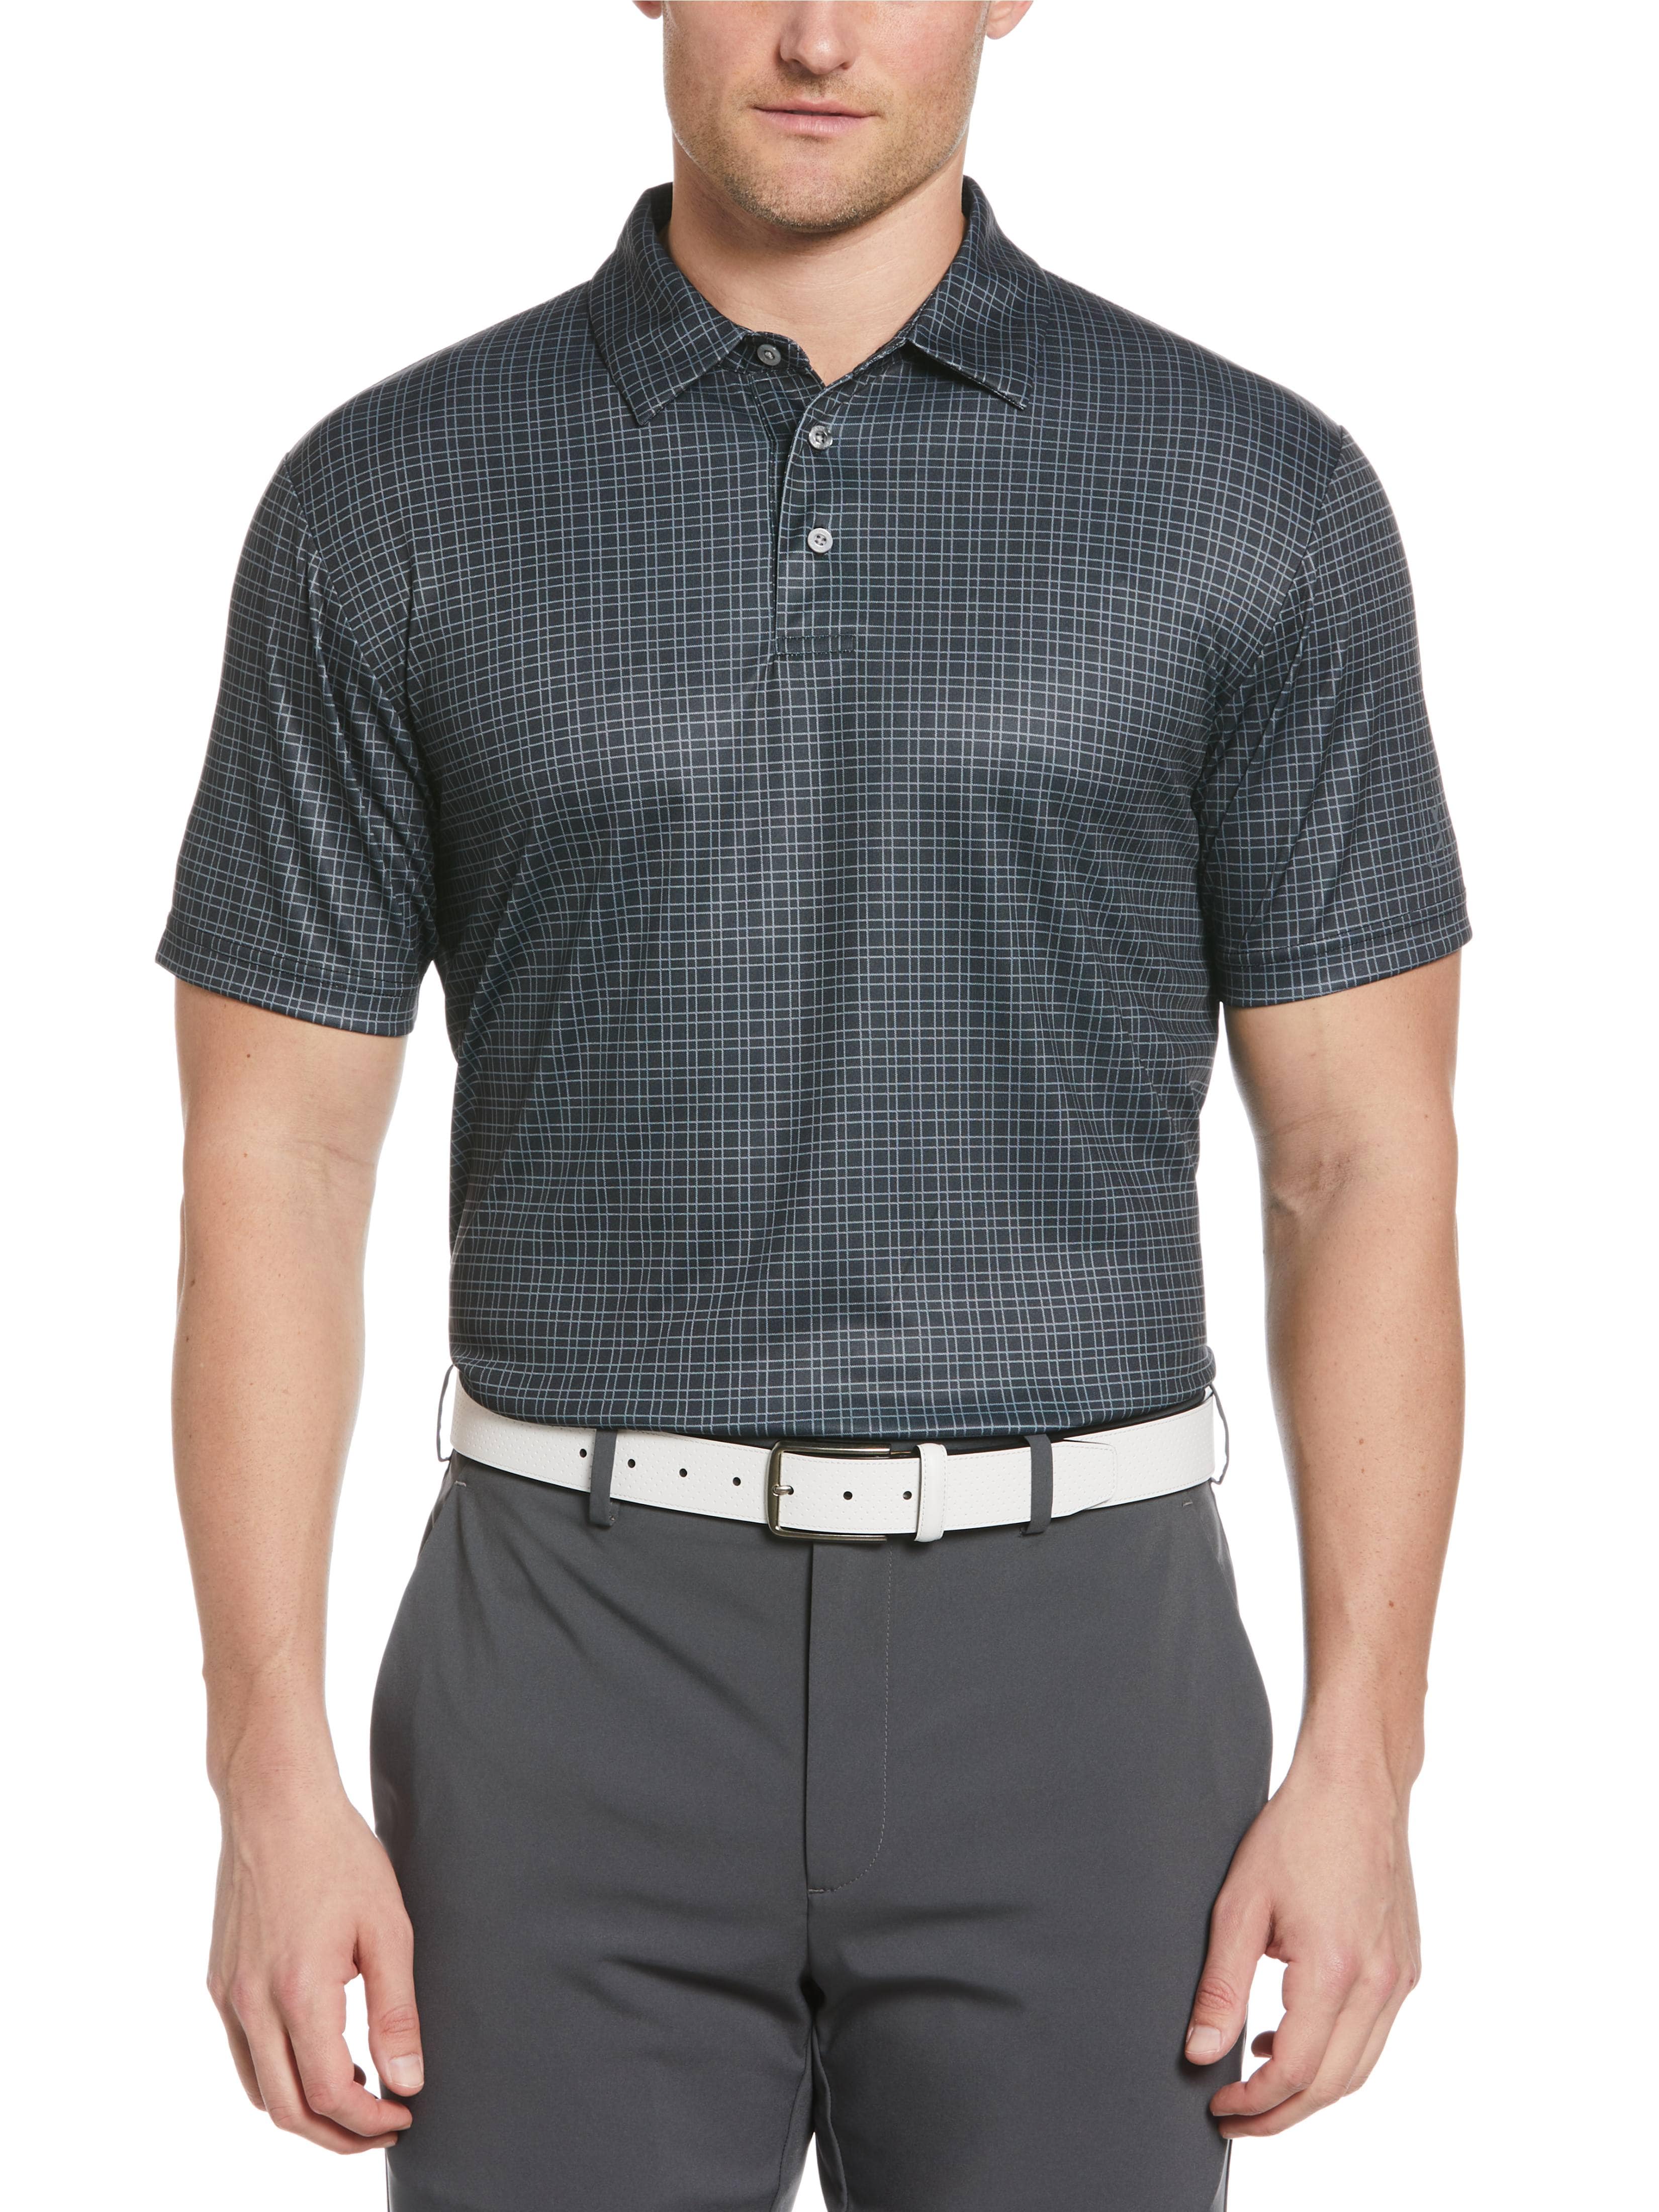 PGA TOUR Apparel Mens Menswear Print Golf Polo Shirt, Size Medium, Black, 100% Polyester | Golf Apparel Shop